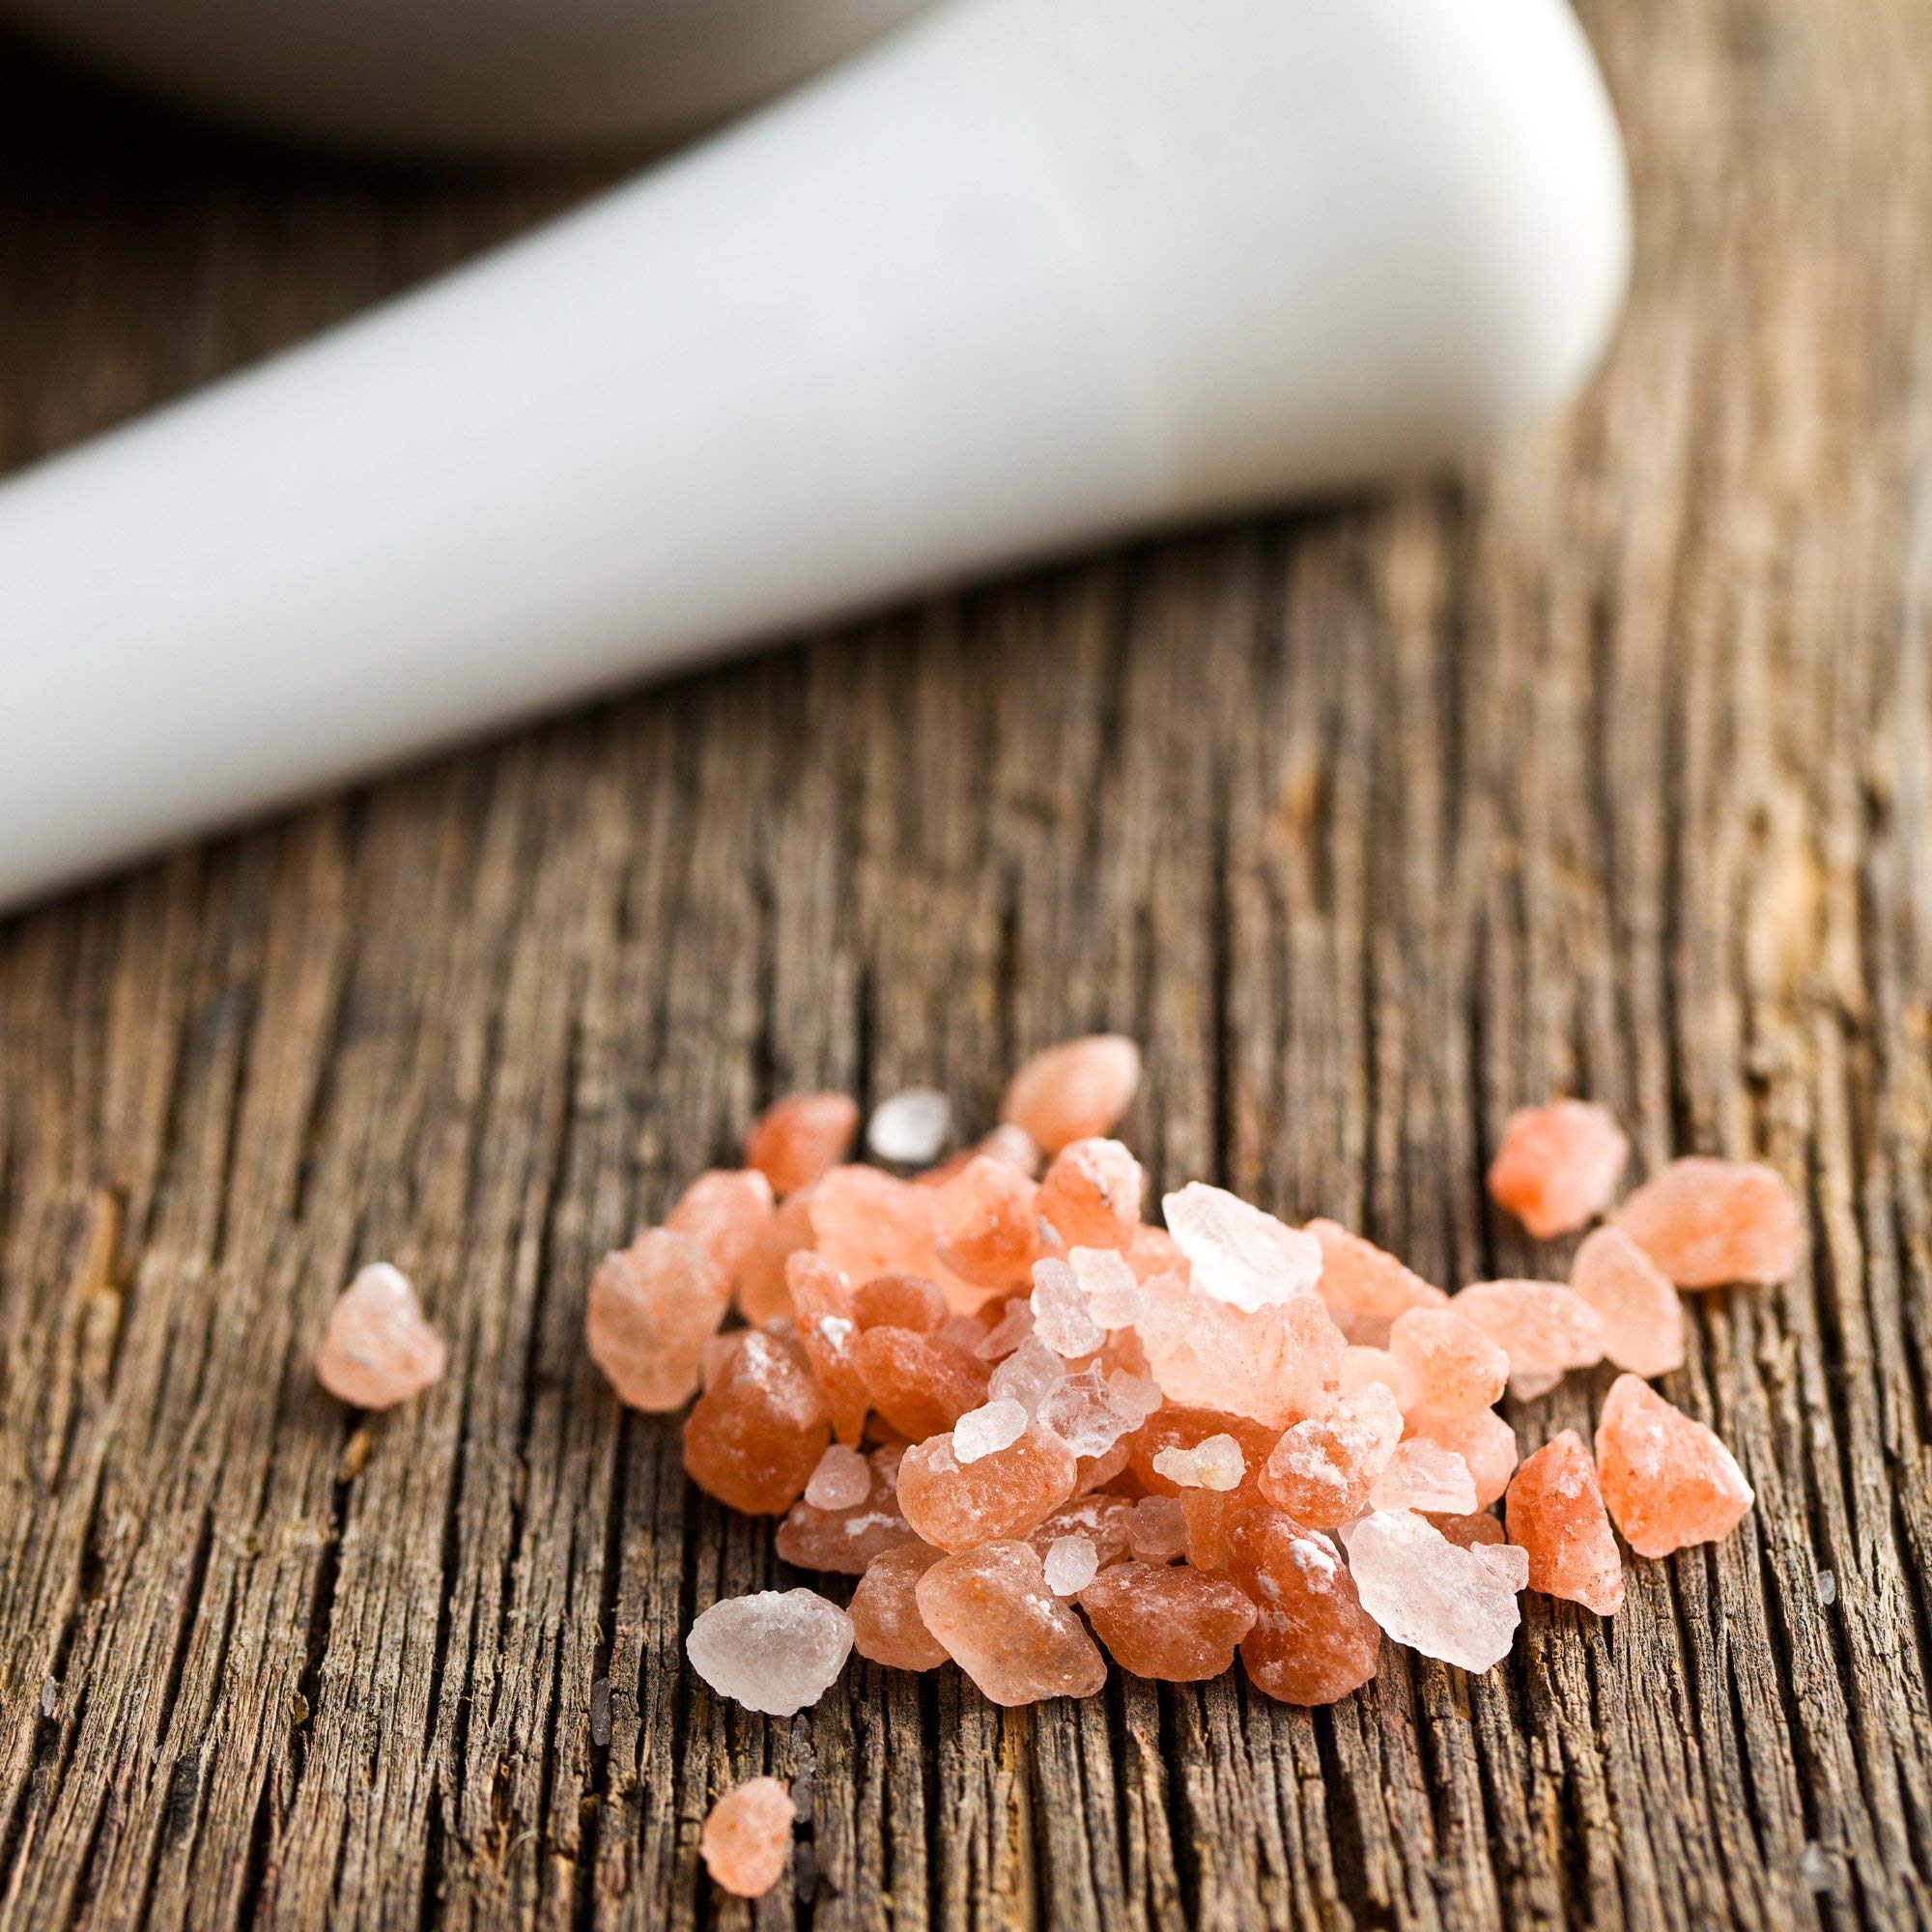 Morton Himalayan Pink Salt, Coarse - for Grilling, Seasoning and